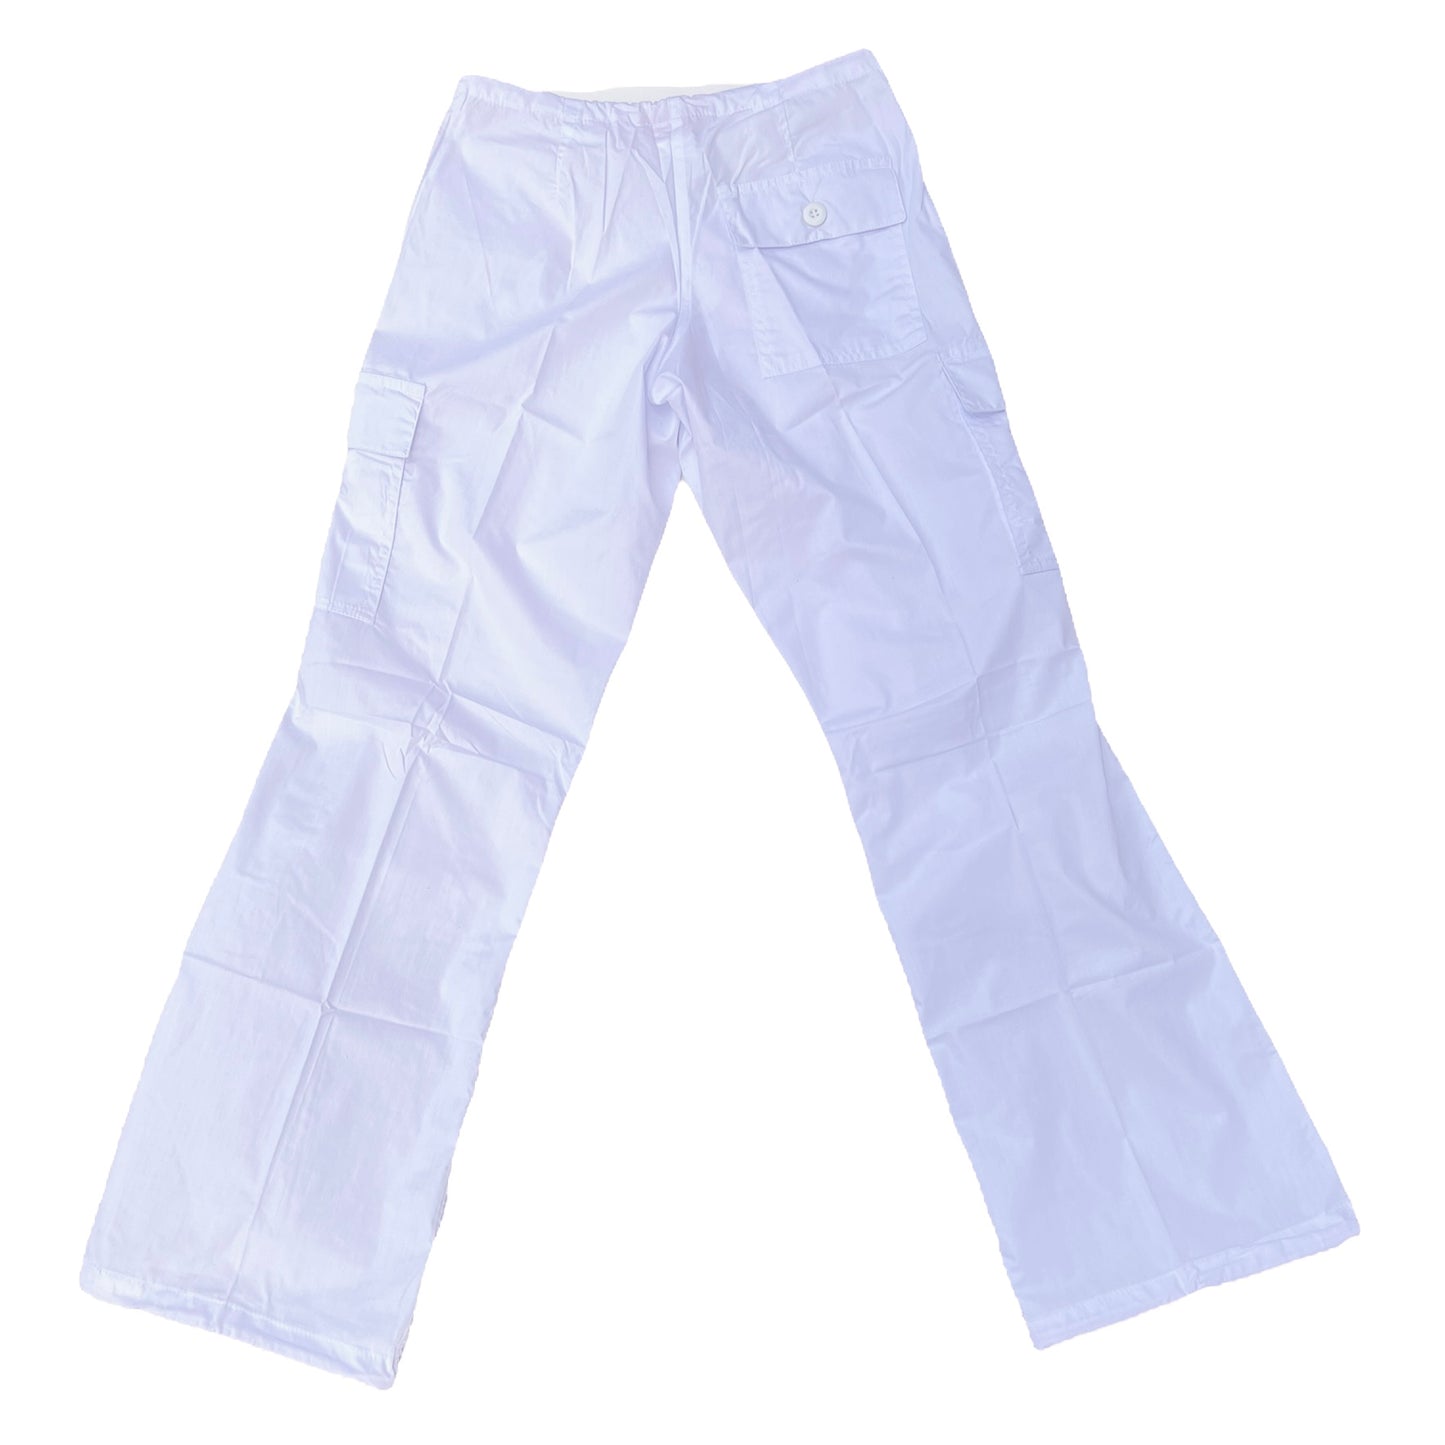 UFO Parachute Pants White 83840